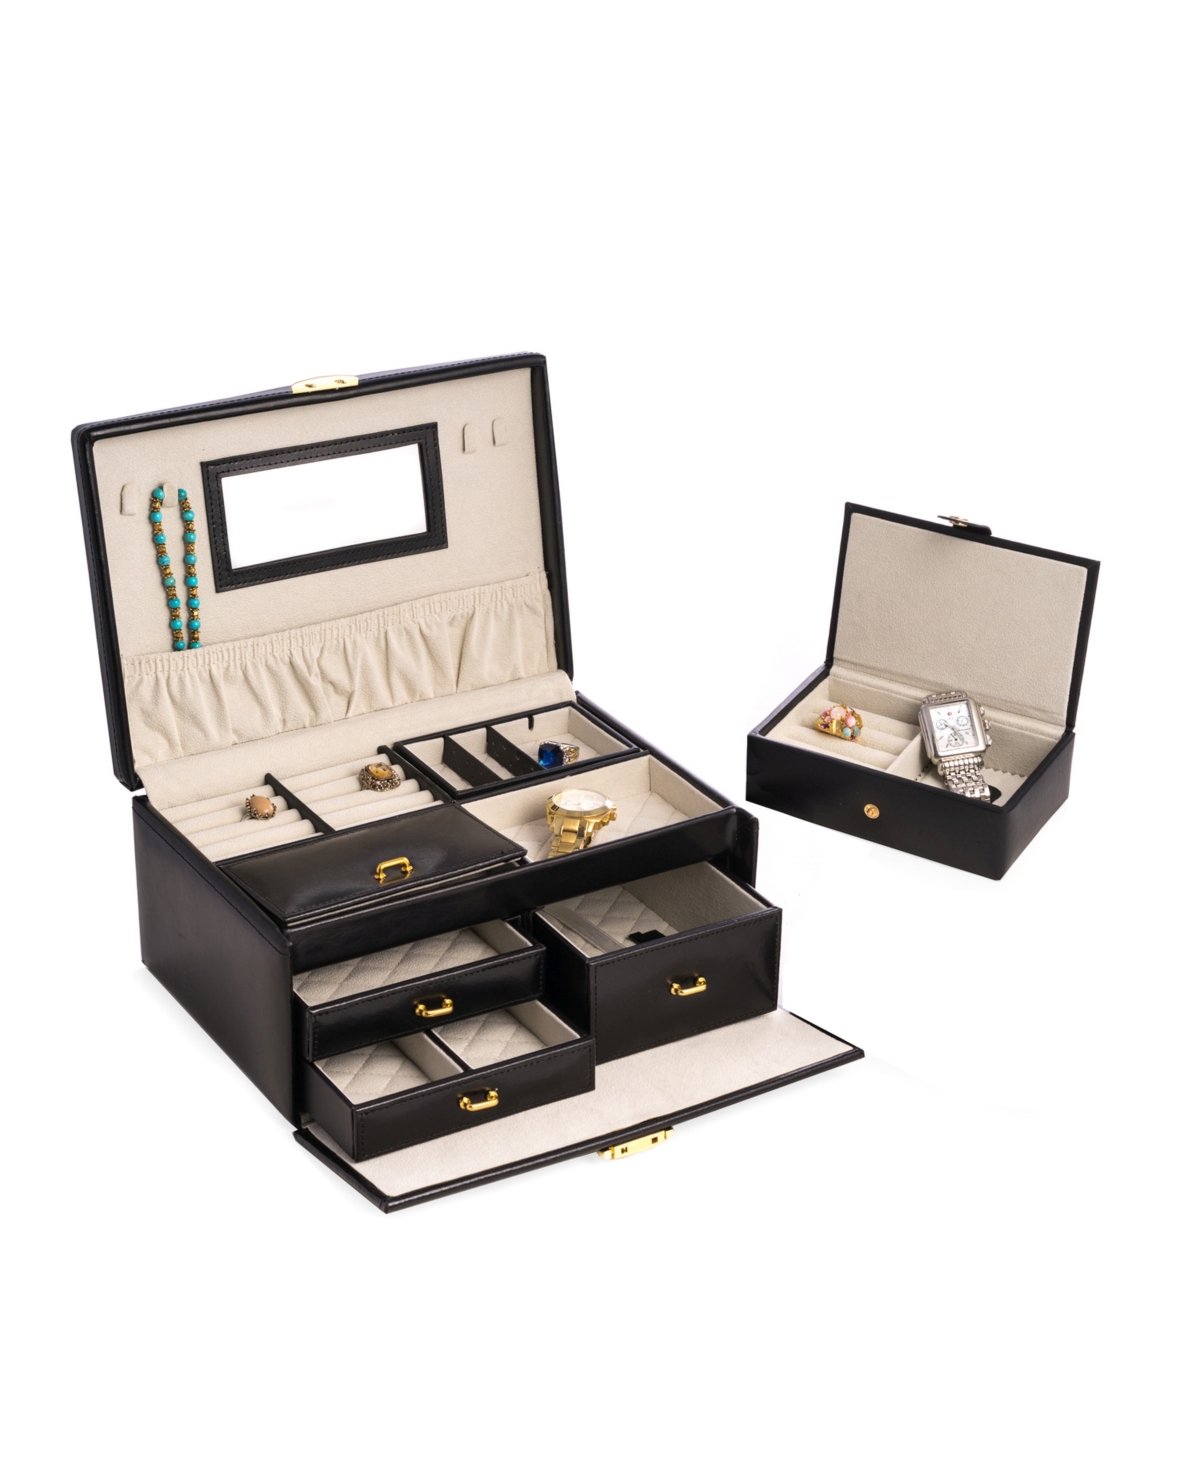 2 Level Jewelry Box - Multi